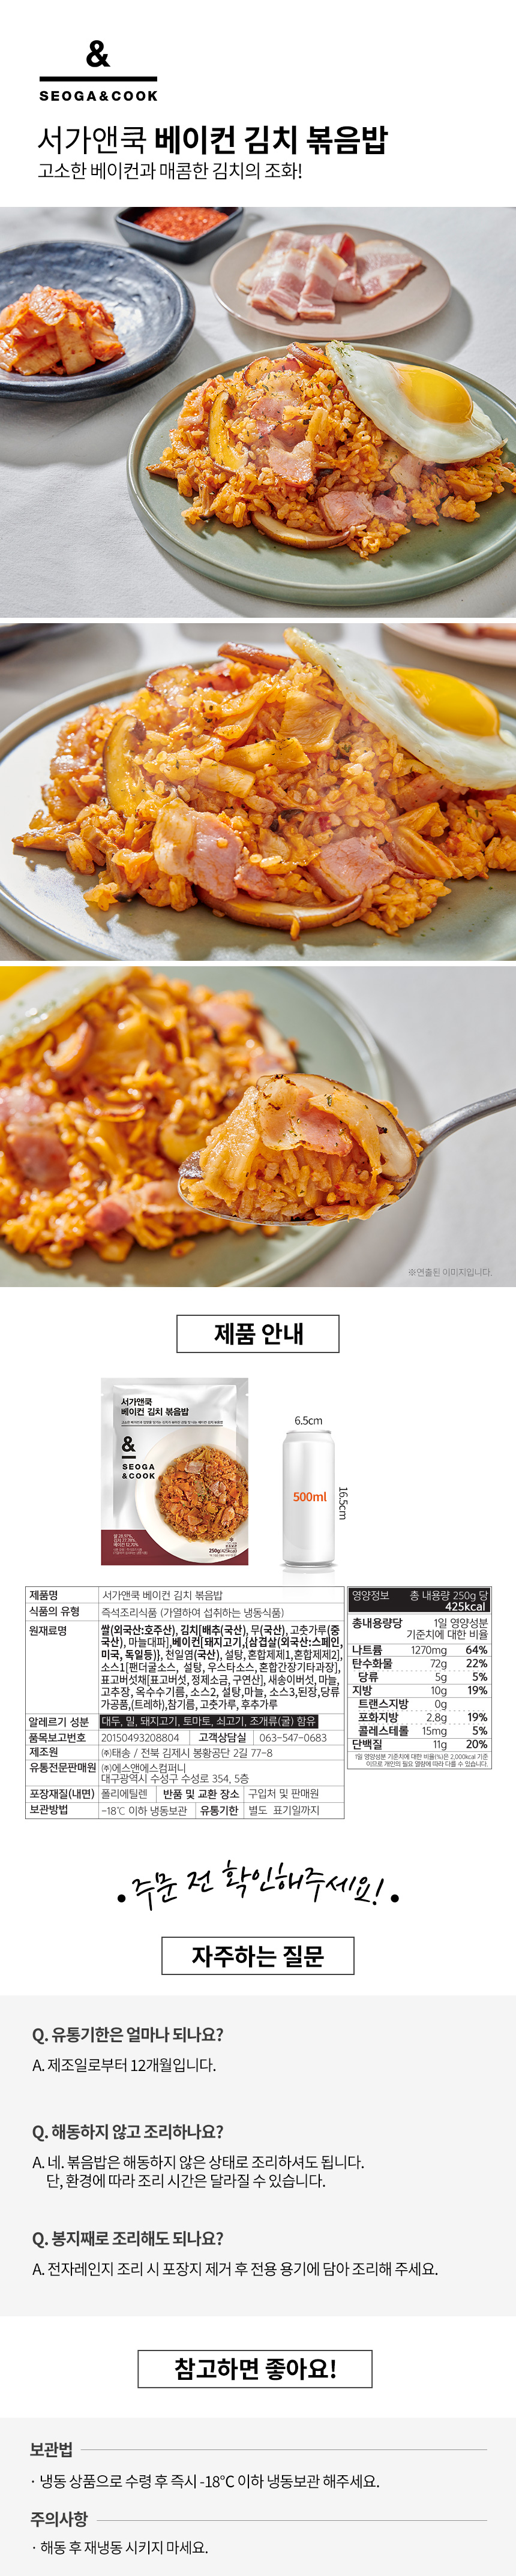 seoga&cook_d_detail_04.jpg